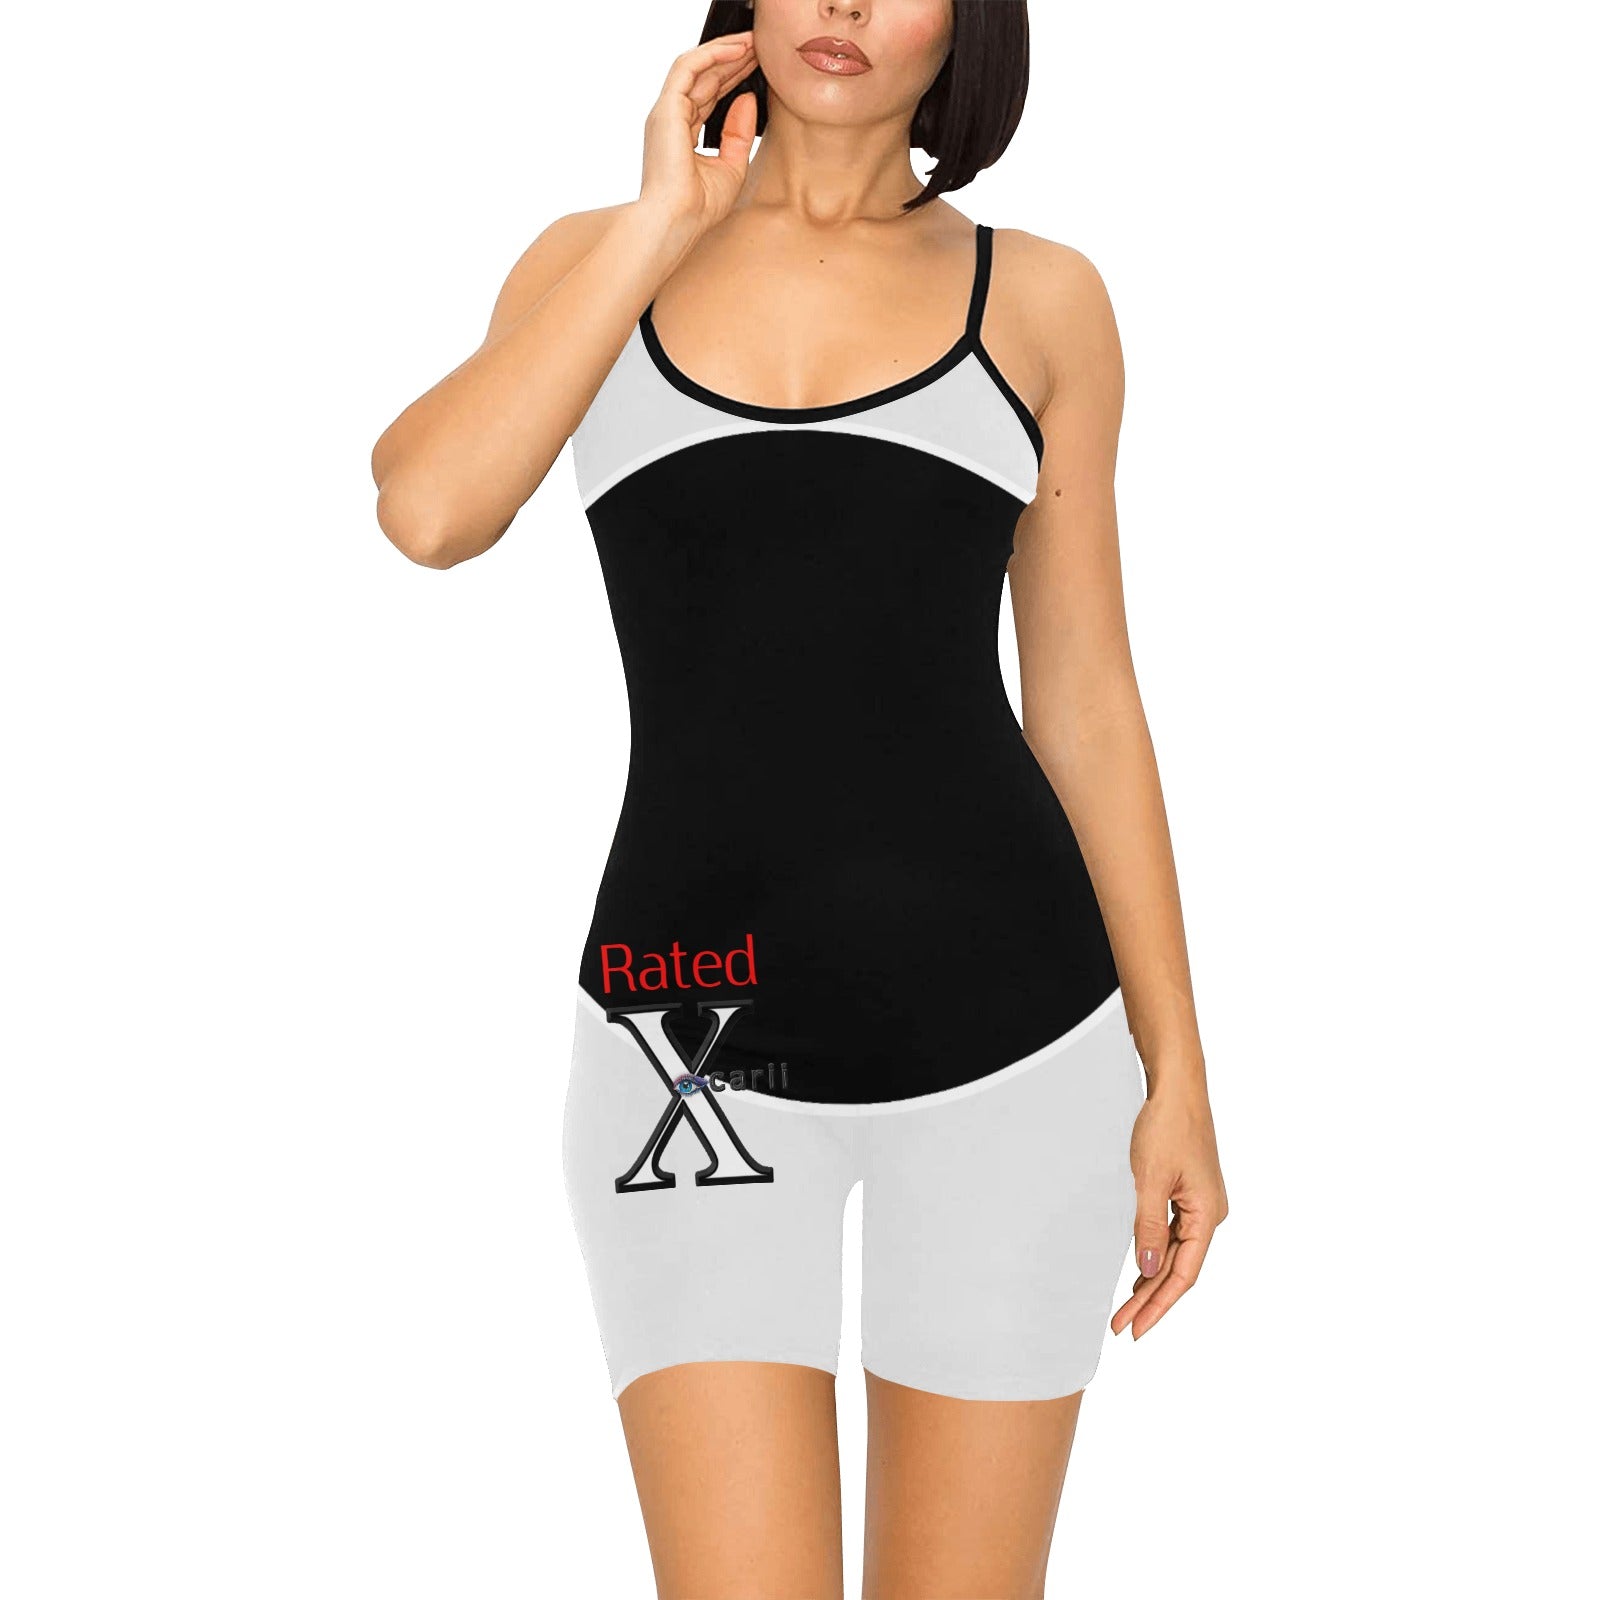 Xcarii Xii - Rated X Yoga Bodysuit